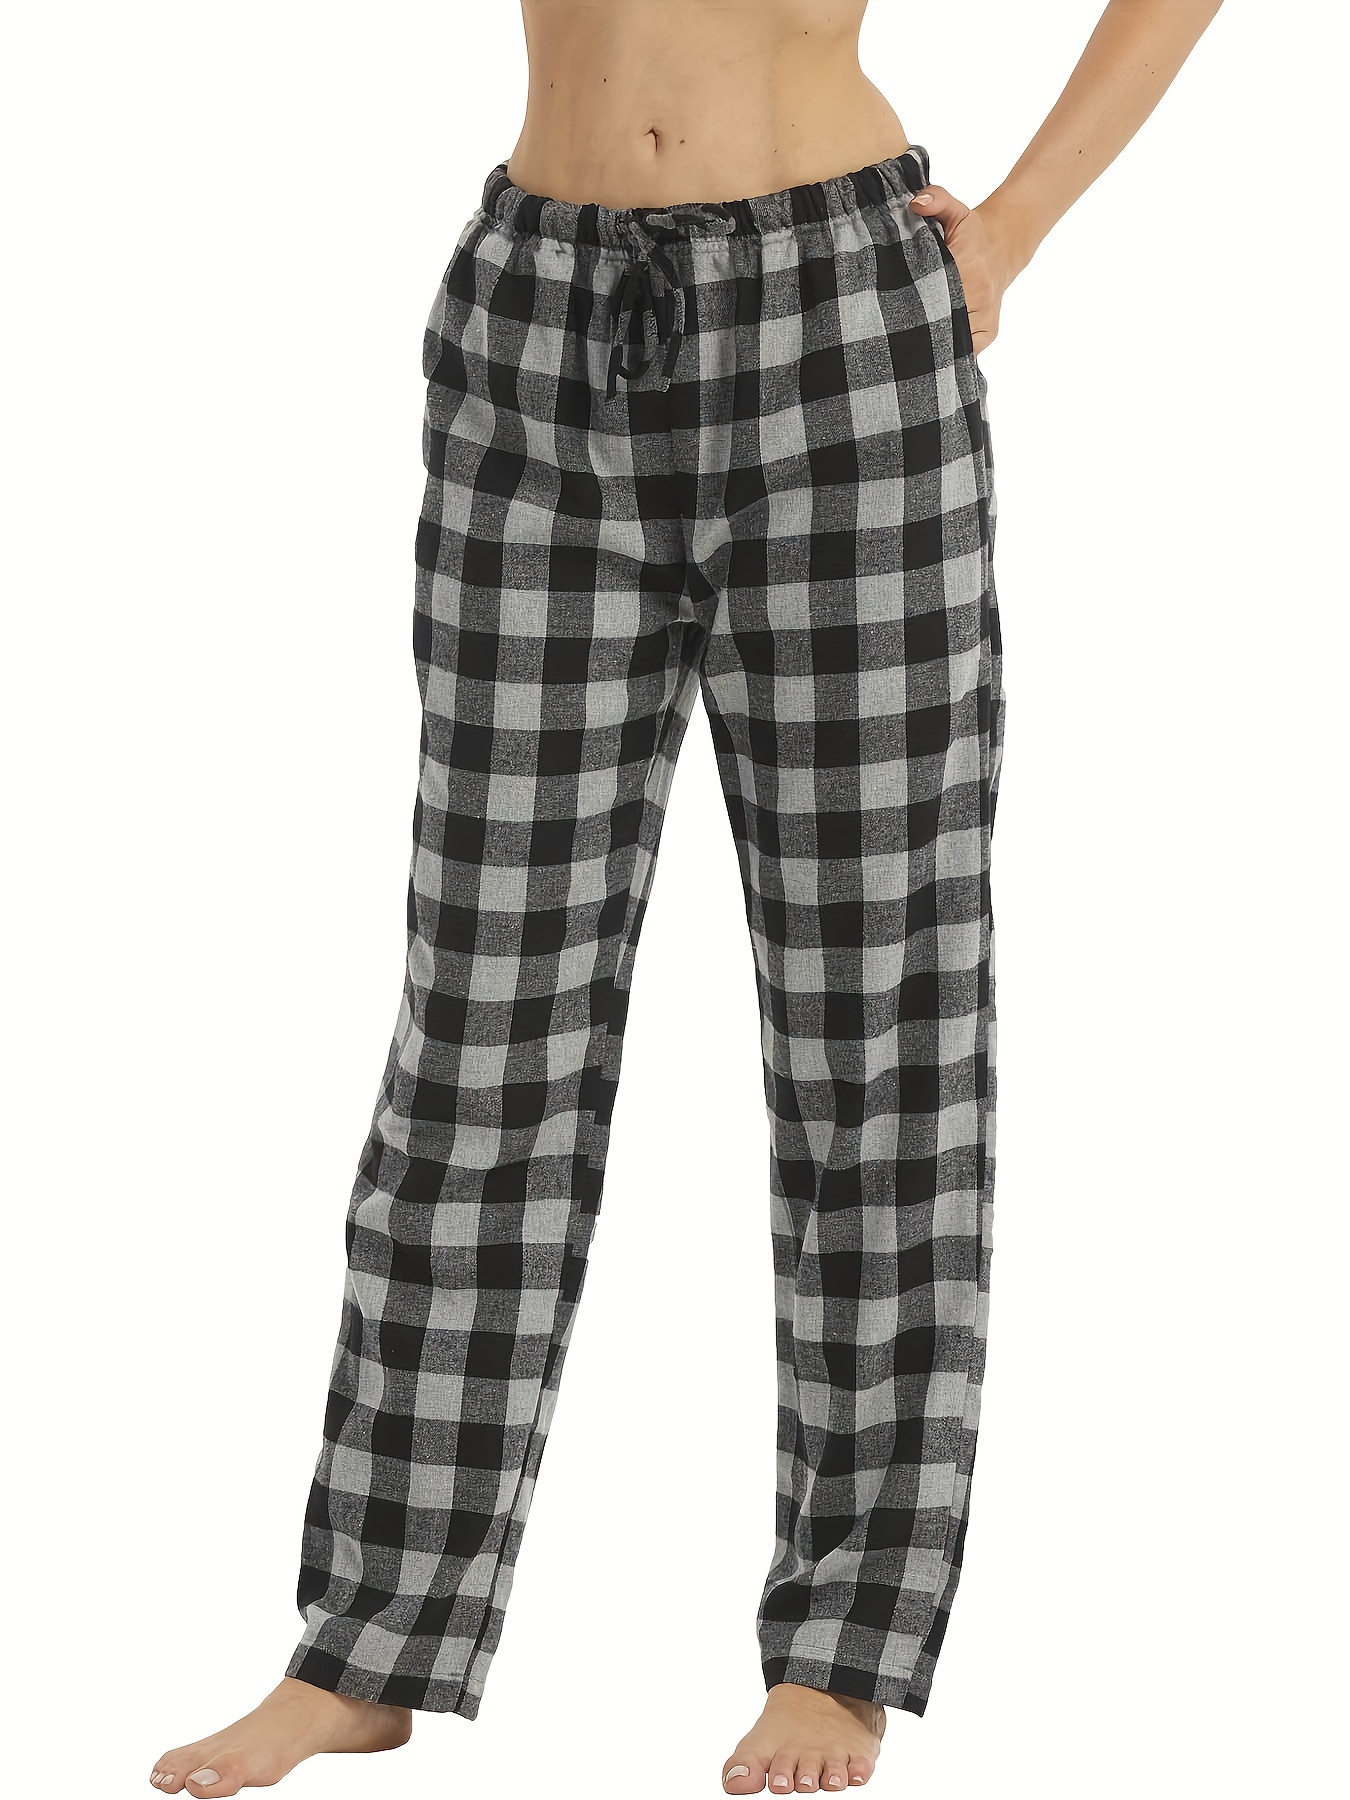 Women Plaid Pajama Pants Sleepwear, Women Lounge Pants Comfy With